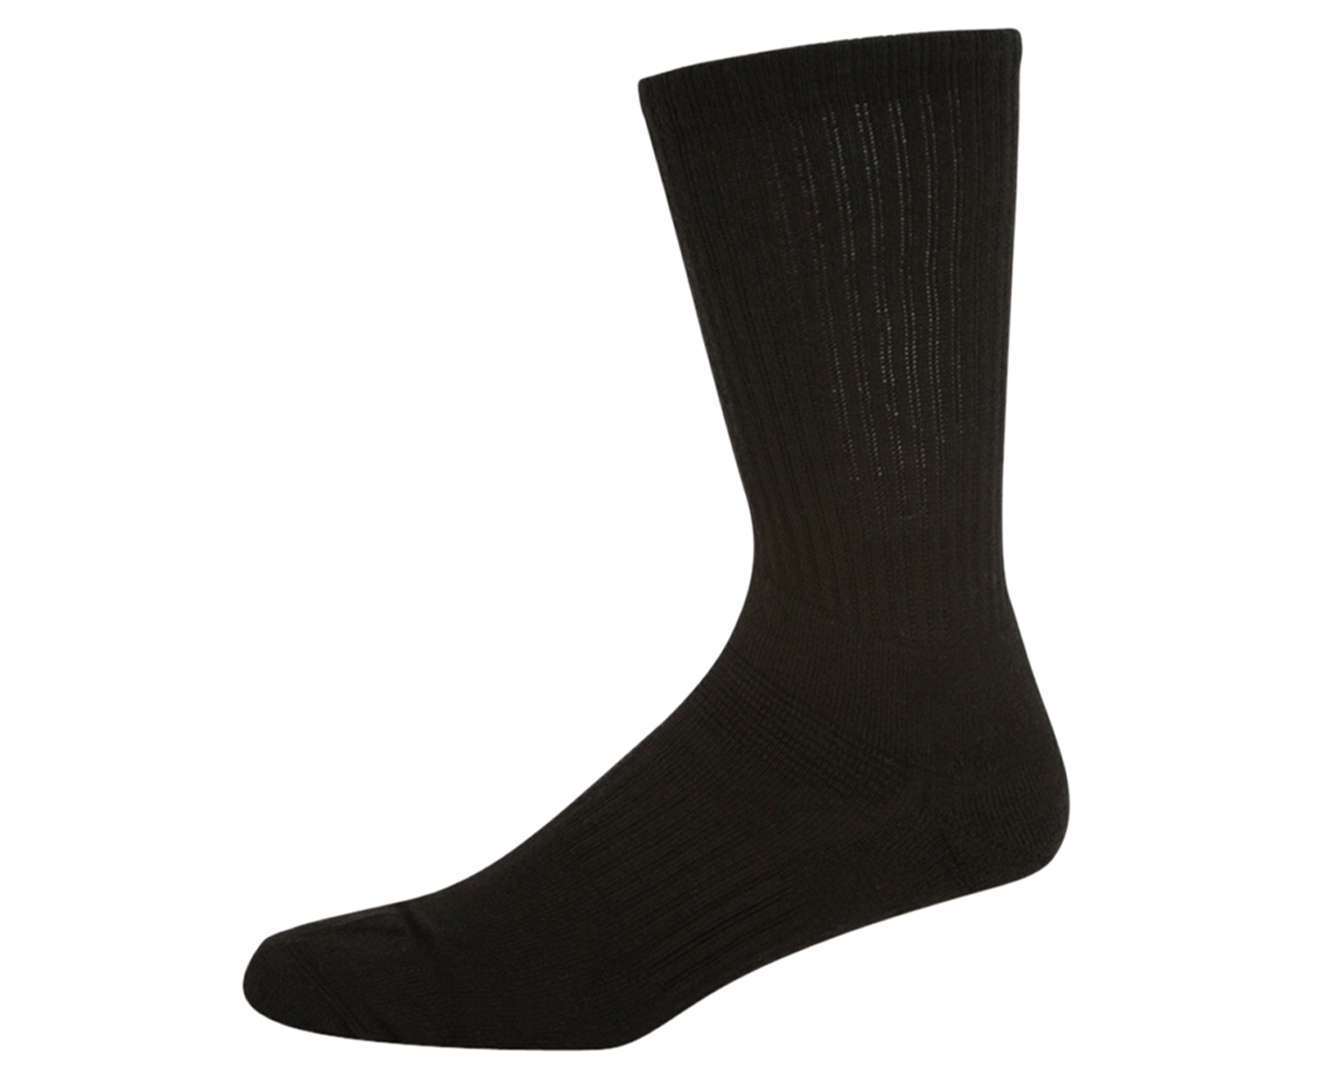 Pussyfoot Socks Men's Comfort Bamboo Sport Socks - Black | Catch.com.au